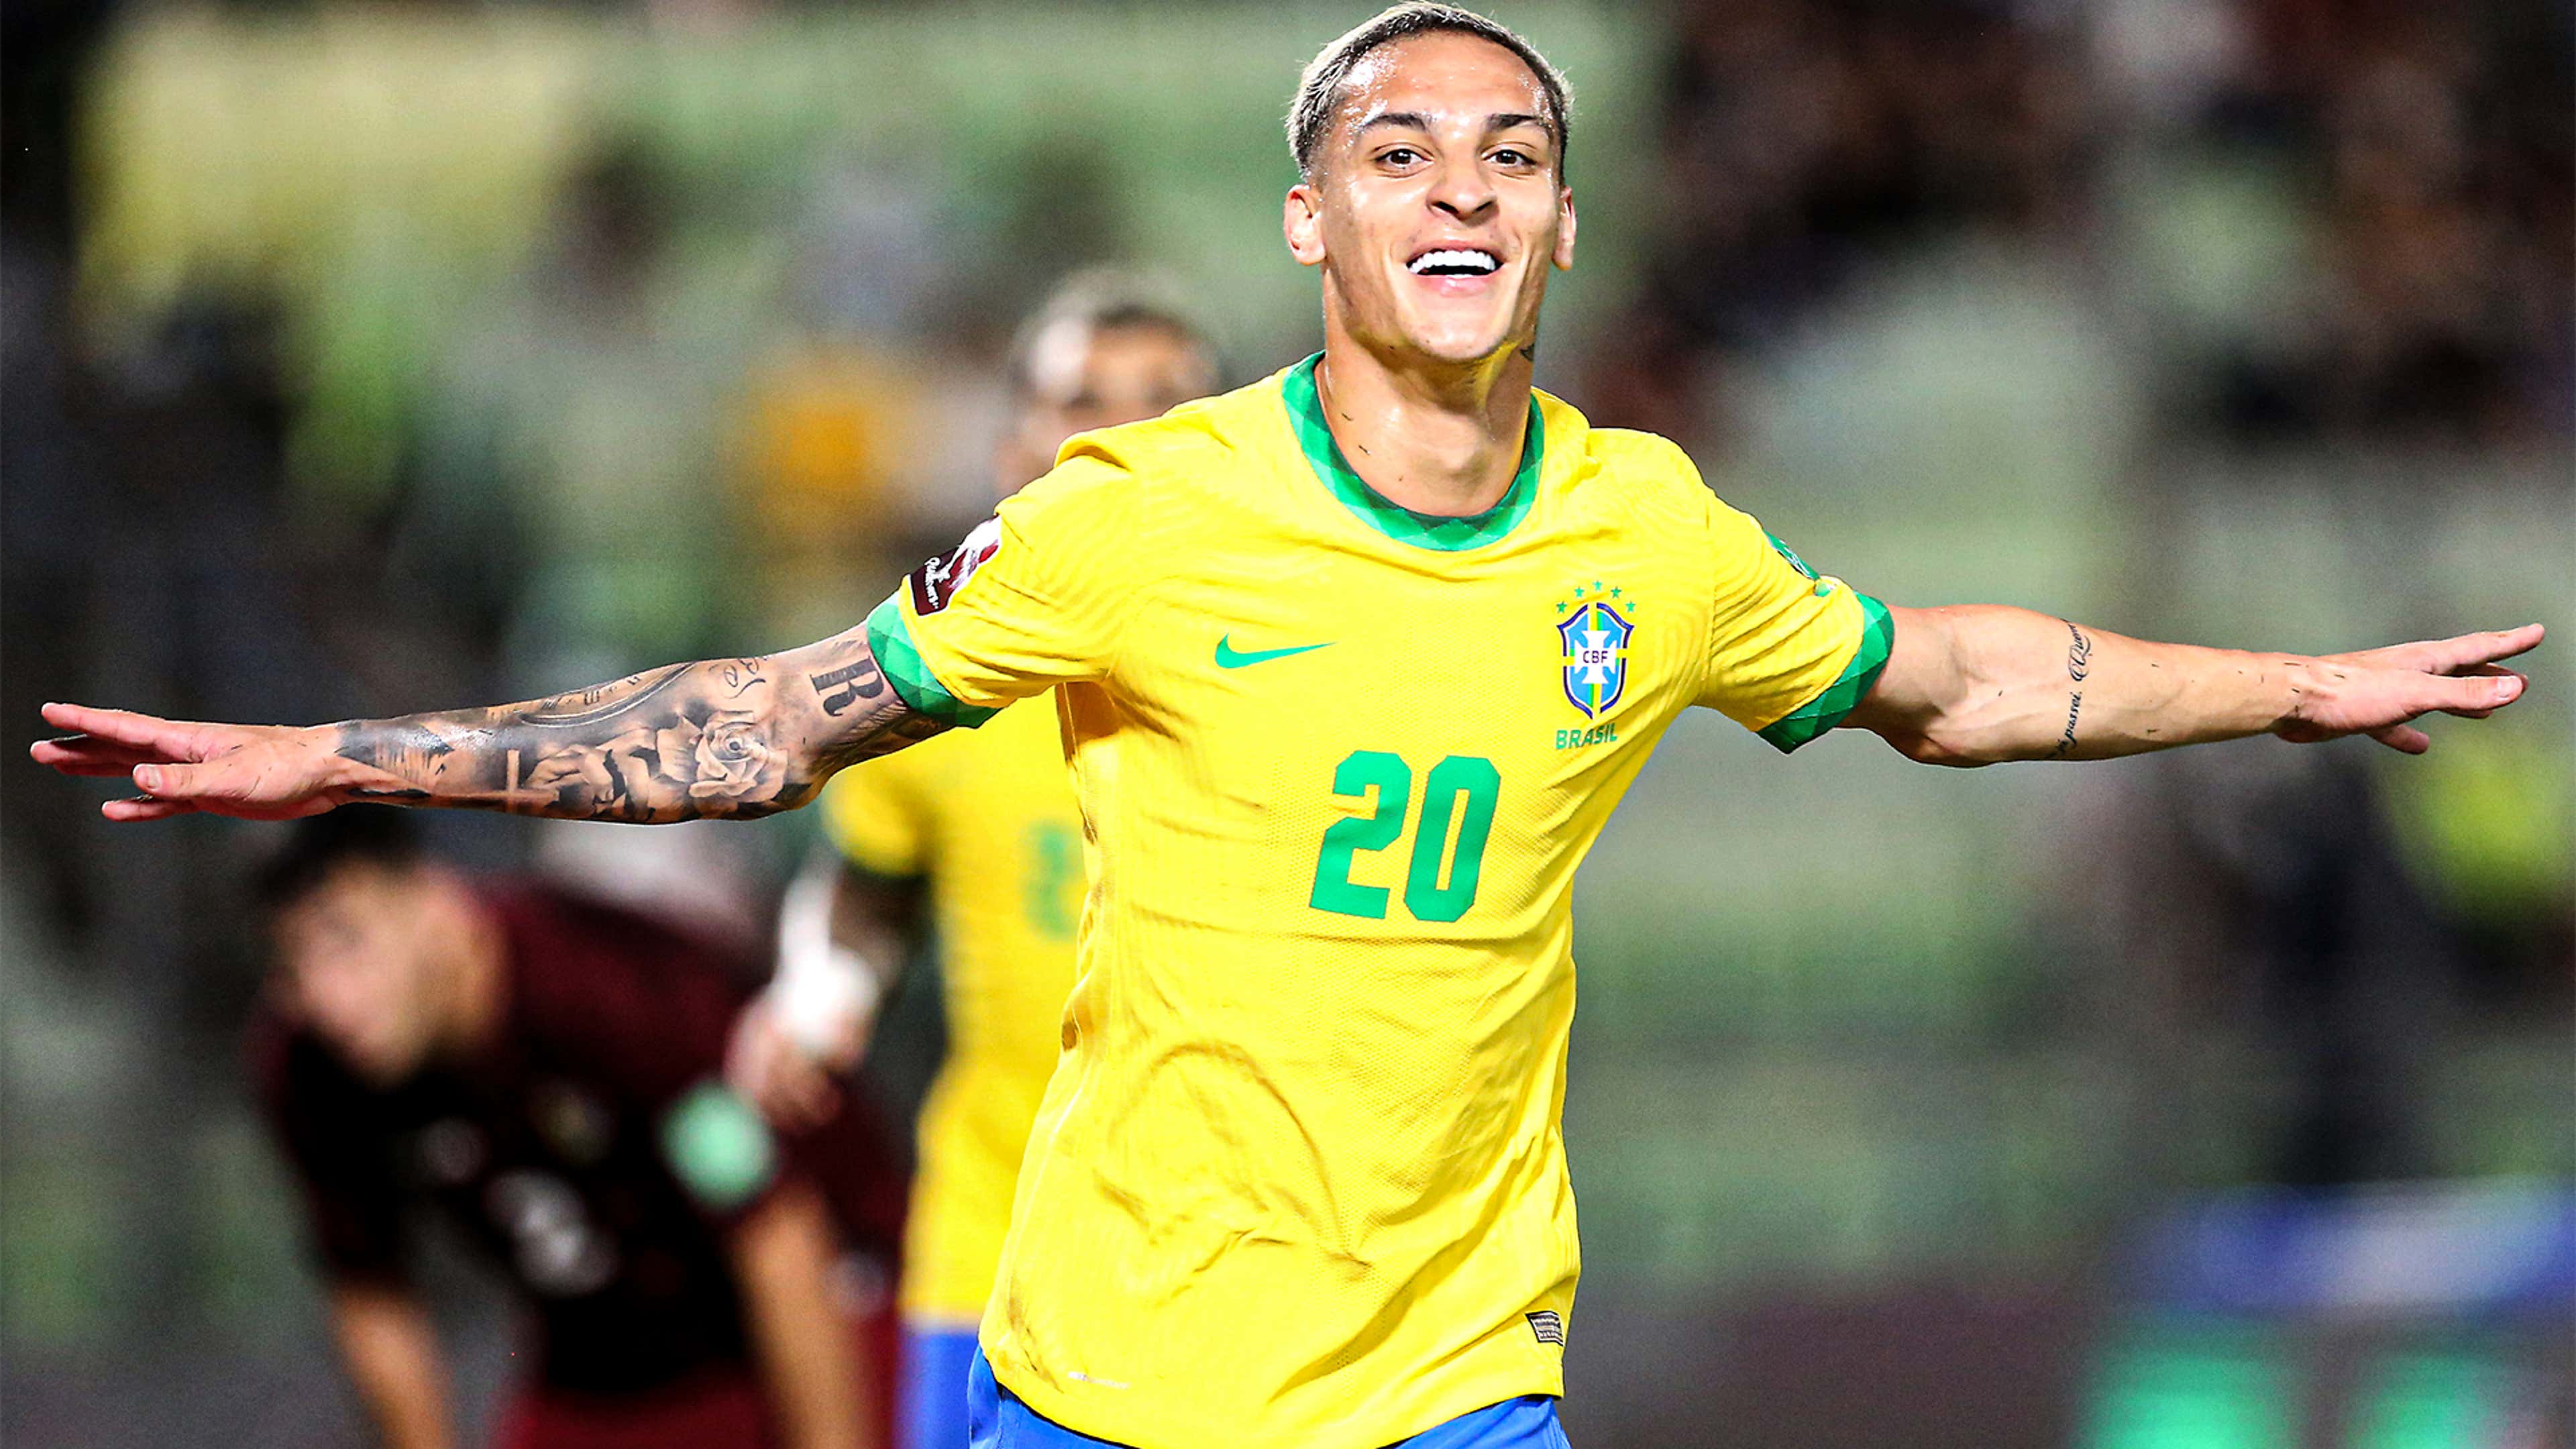 Playing.io sponsors charity football match with Brazilian players